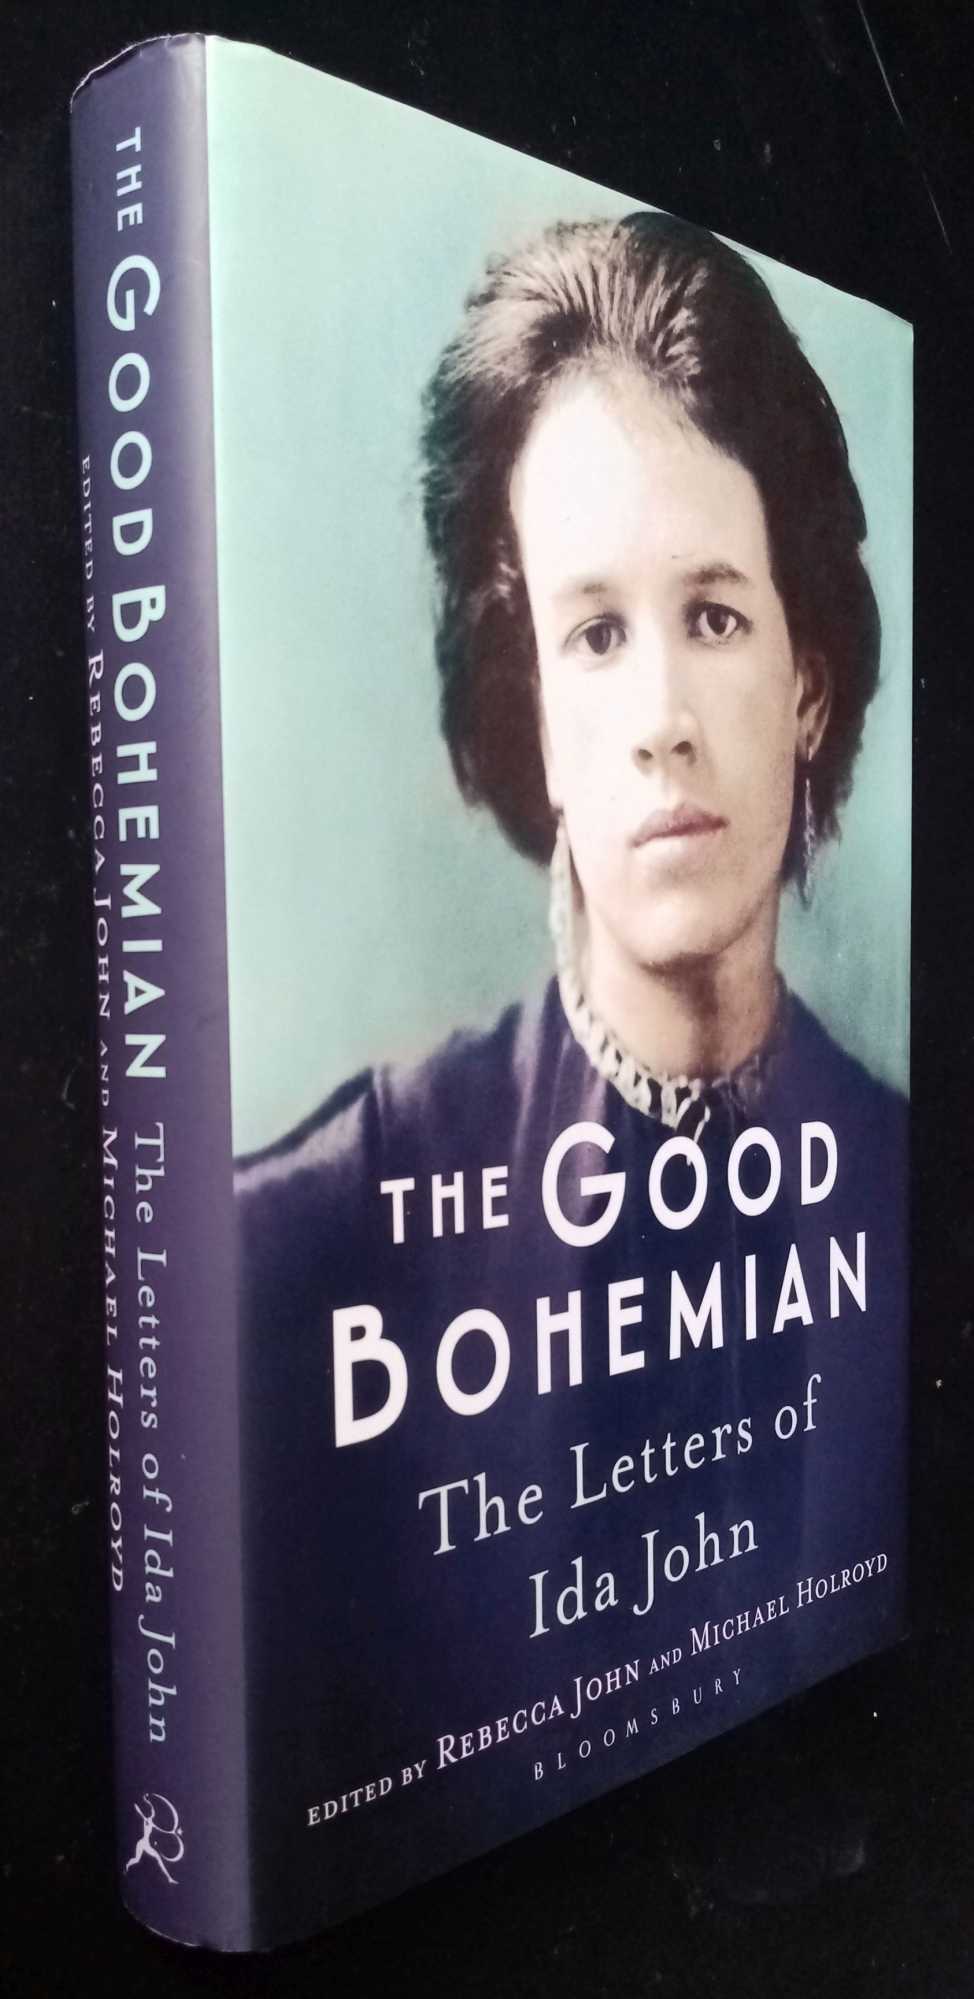 Rebecca John, ed. - The Good Bohemian: The Letters of Ida John